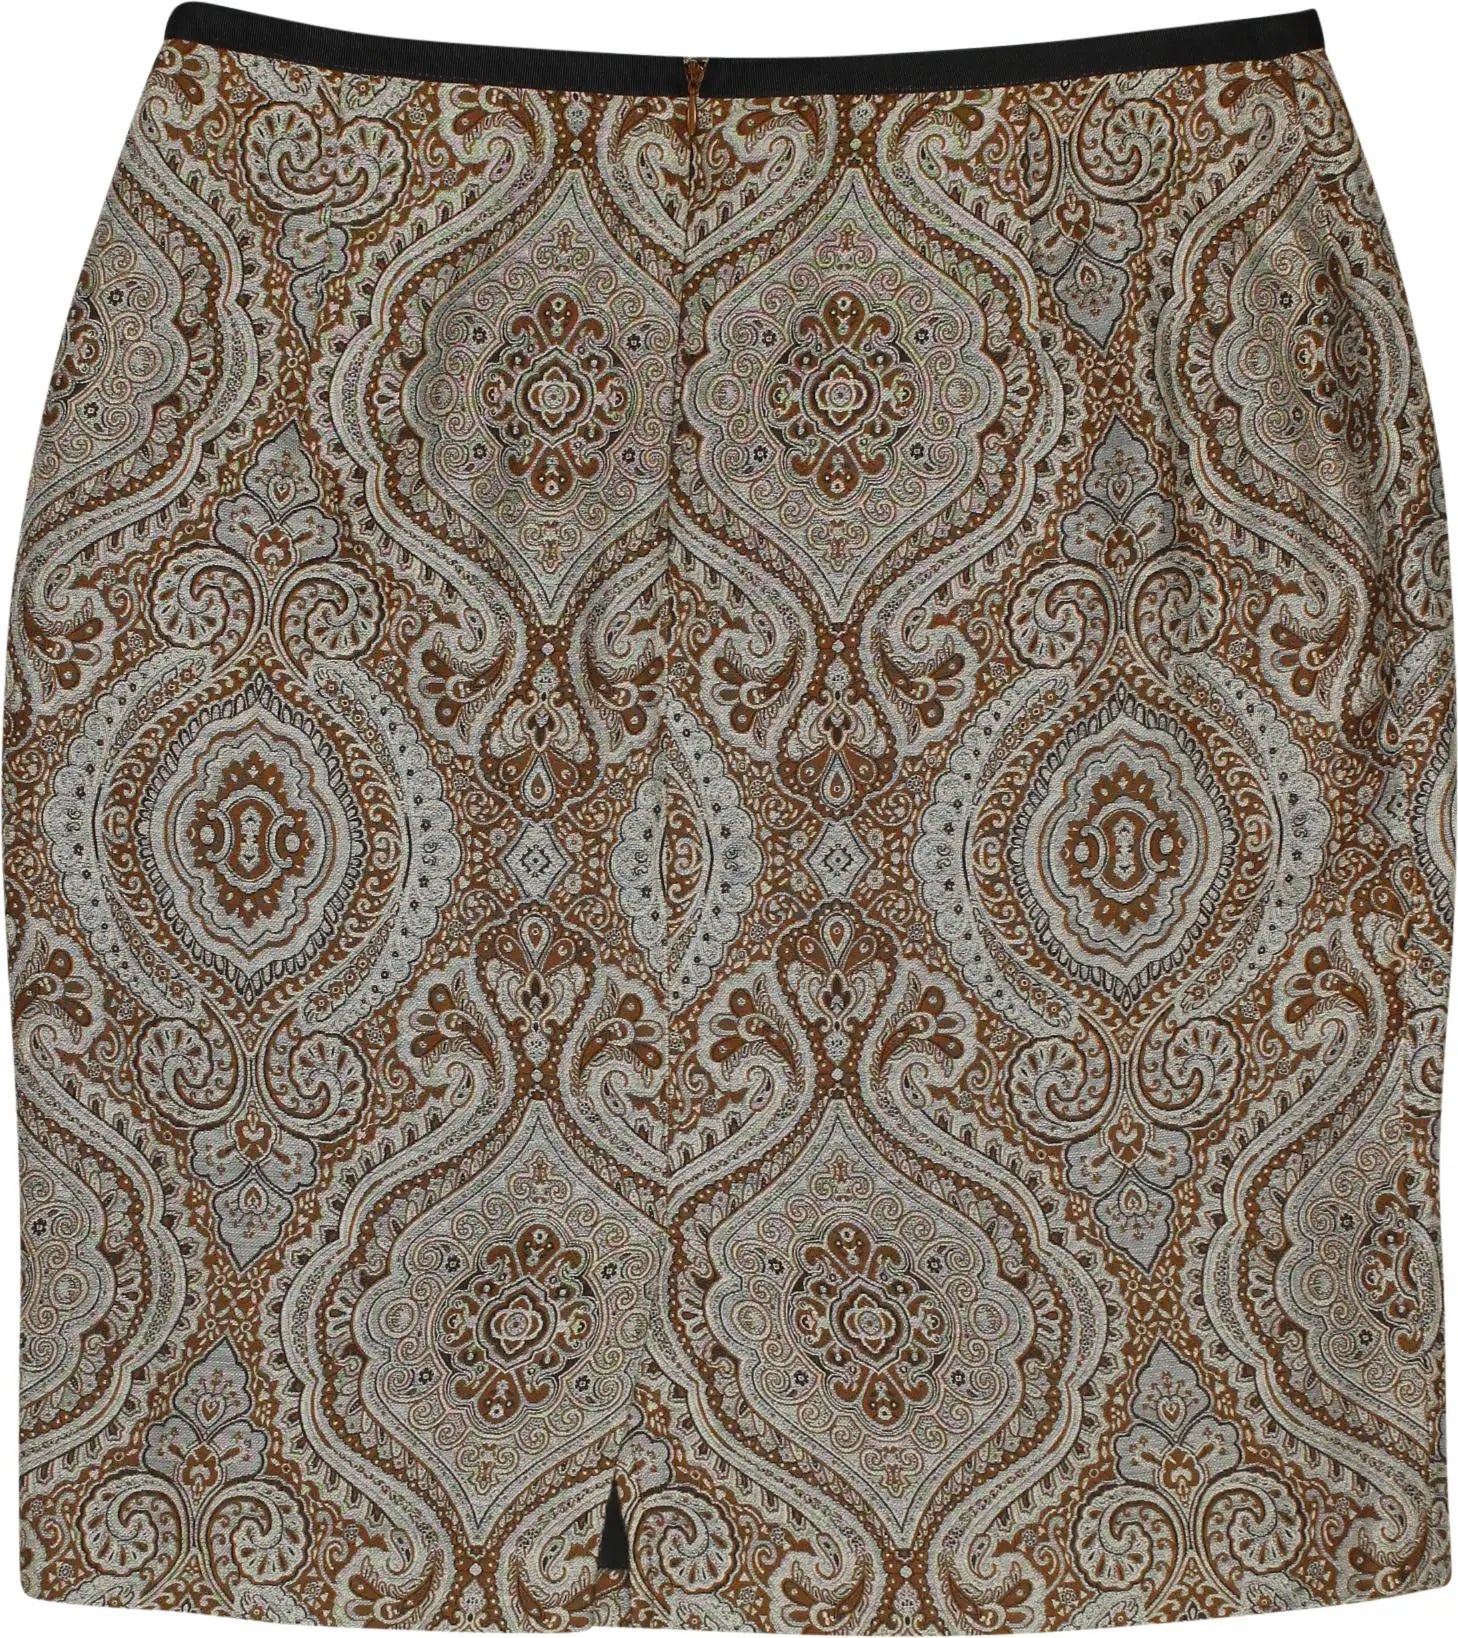 Van Avendonck - Patterned Skirt- ThriftTale.com - Vintage and second handclothing